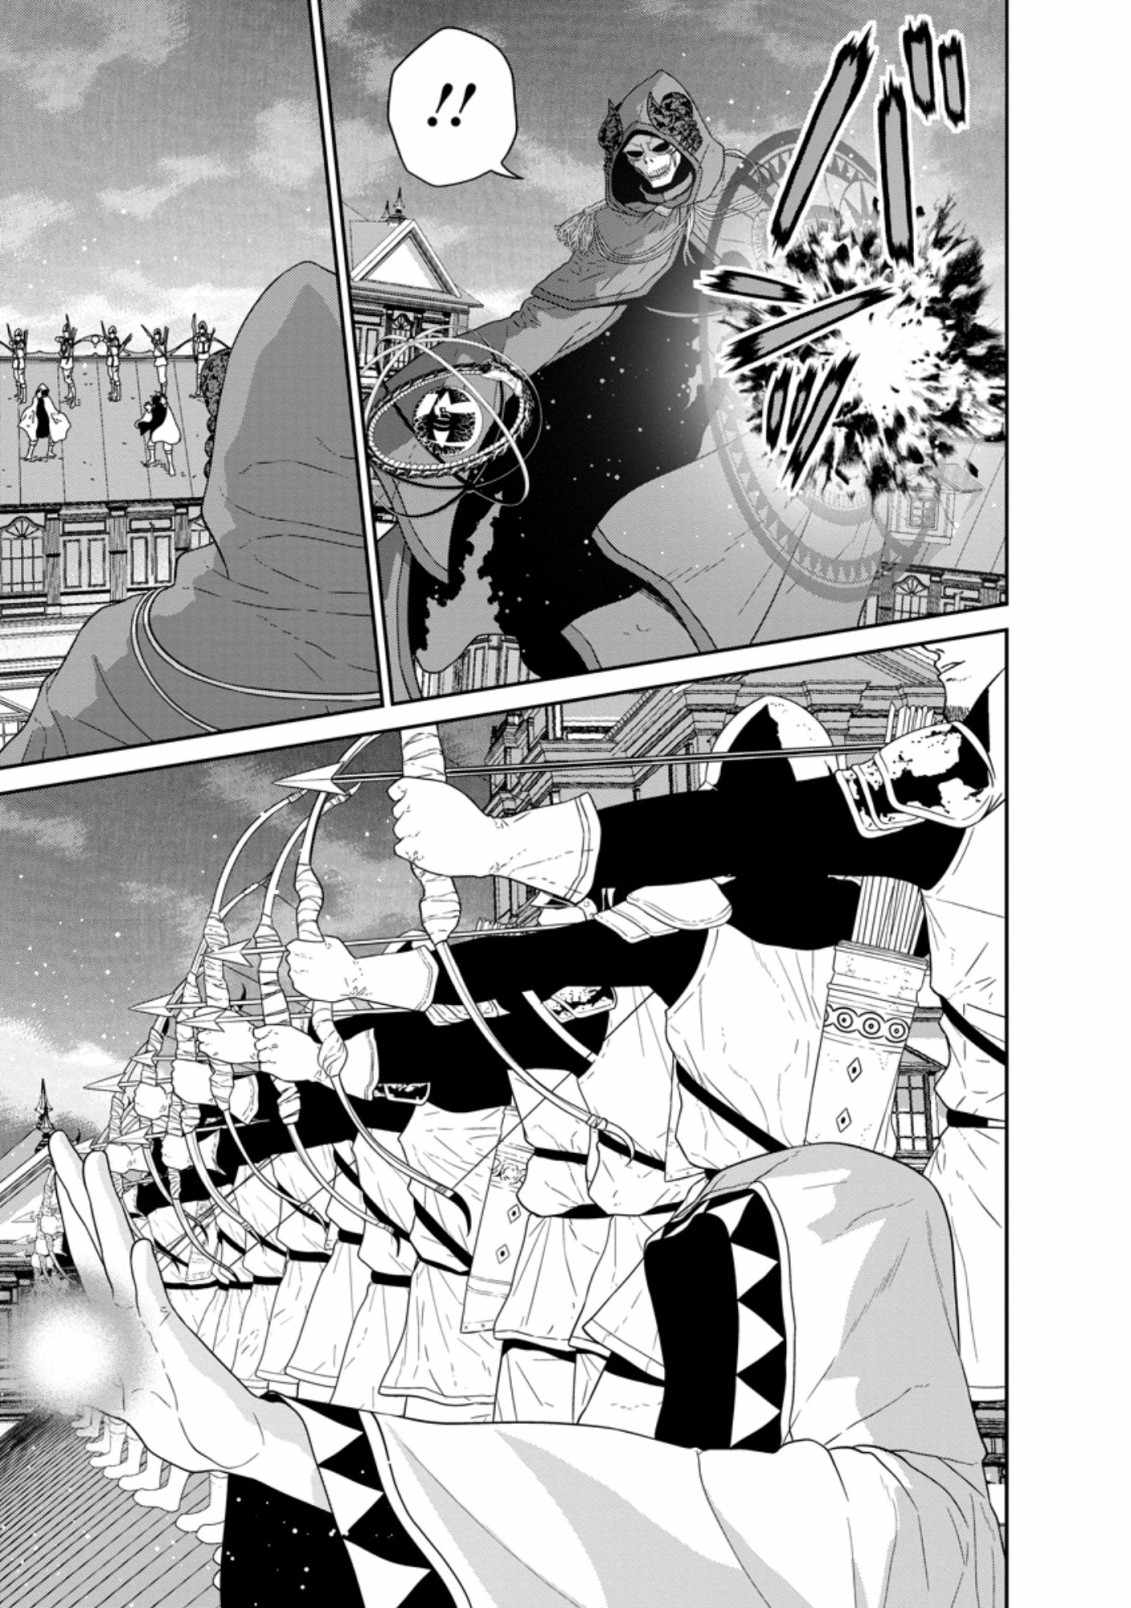 Maou Gun Saikyou no Majutsushi wa Ningen datta Chapter 31-2-eng-li - Page 1